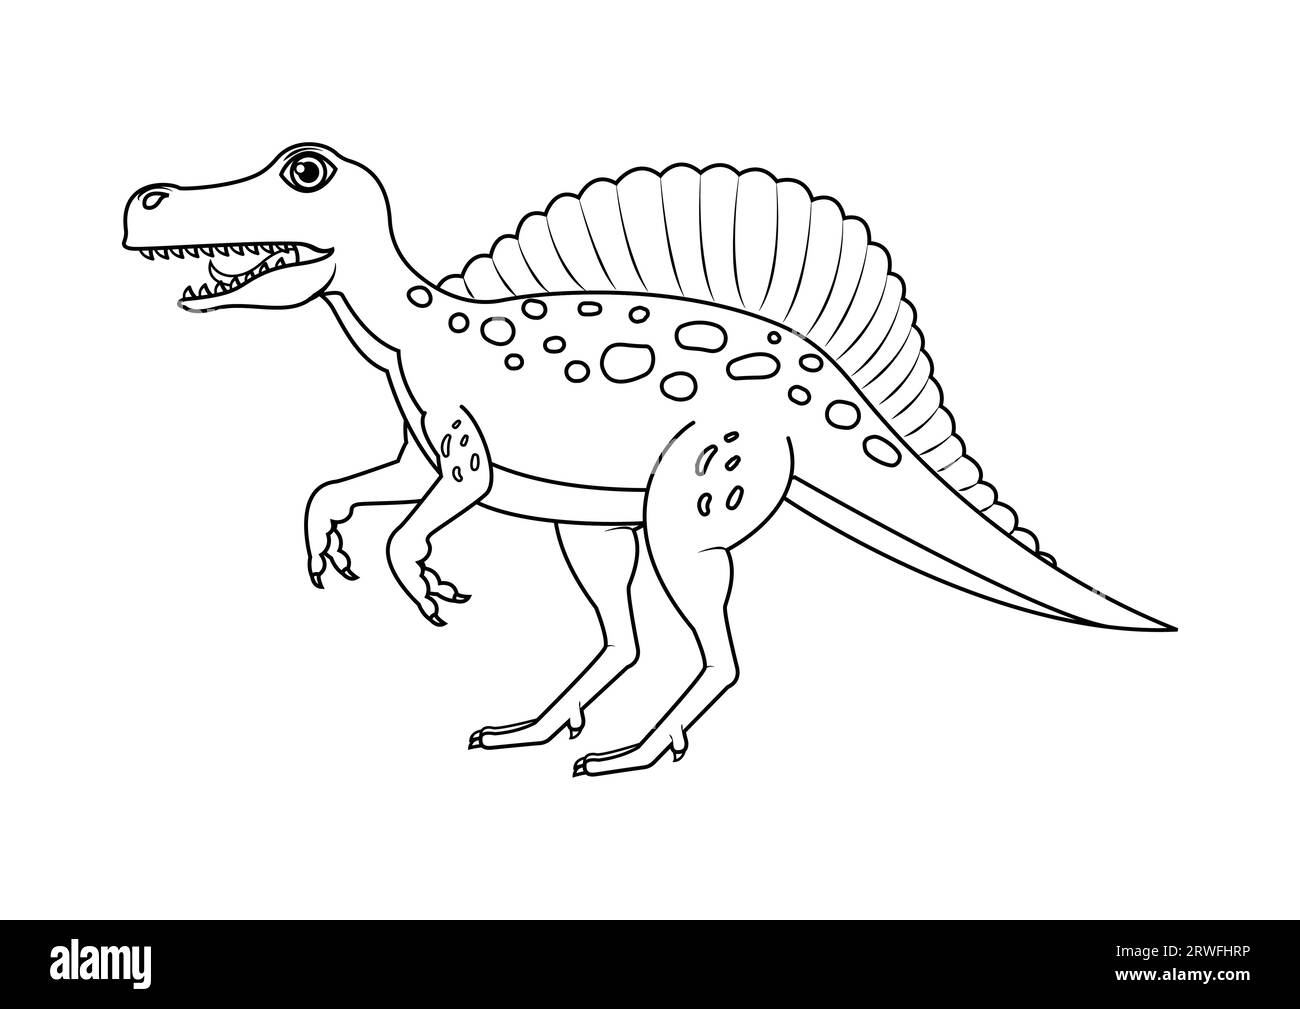 Noir et blanc Spinosaurus Dinosaur Cartoon Character Vector. Coloriage d'un dinosaure Spinosaurus Illustration de Vecteur